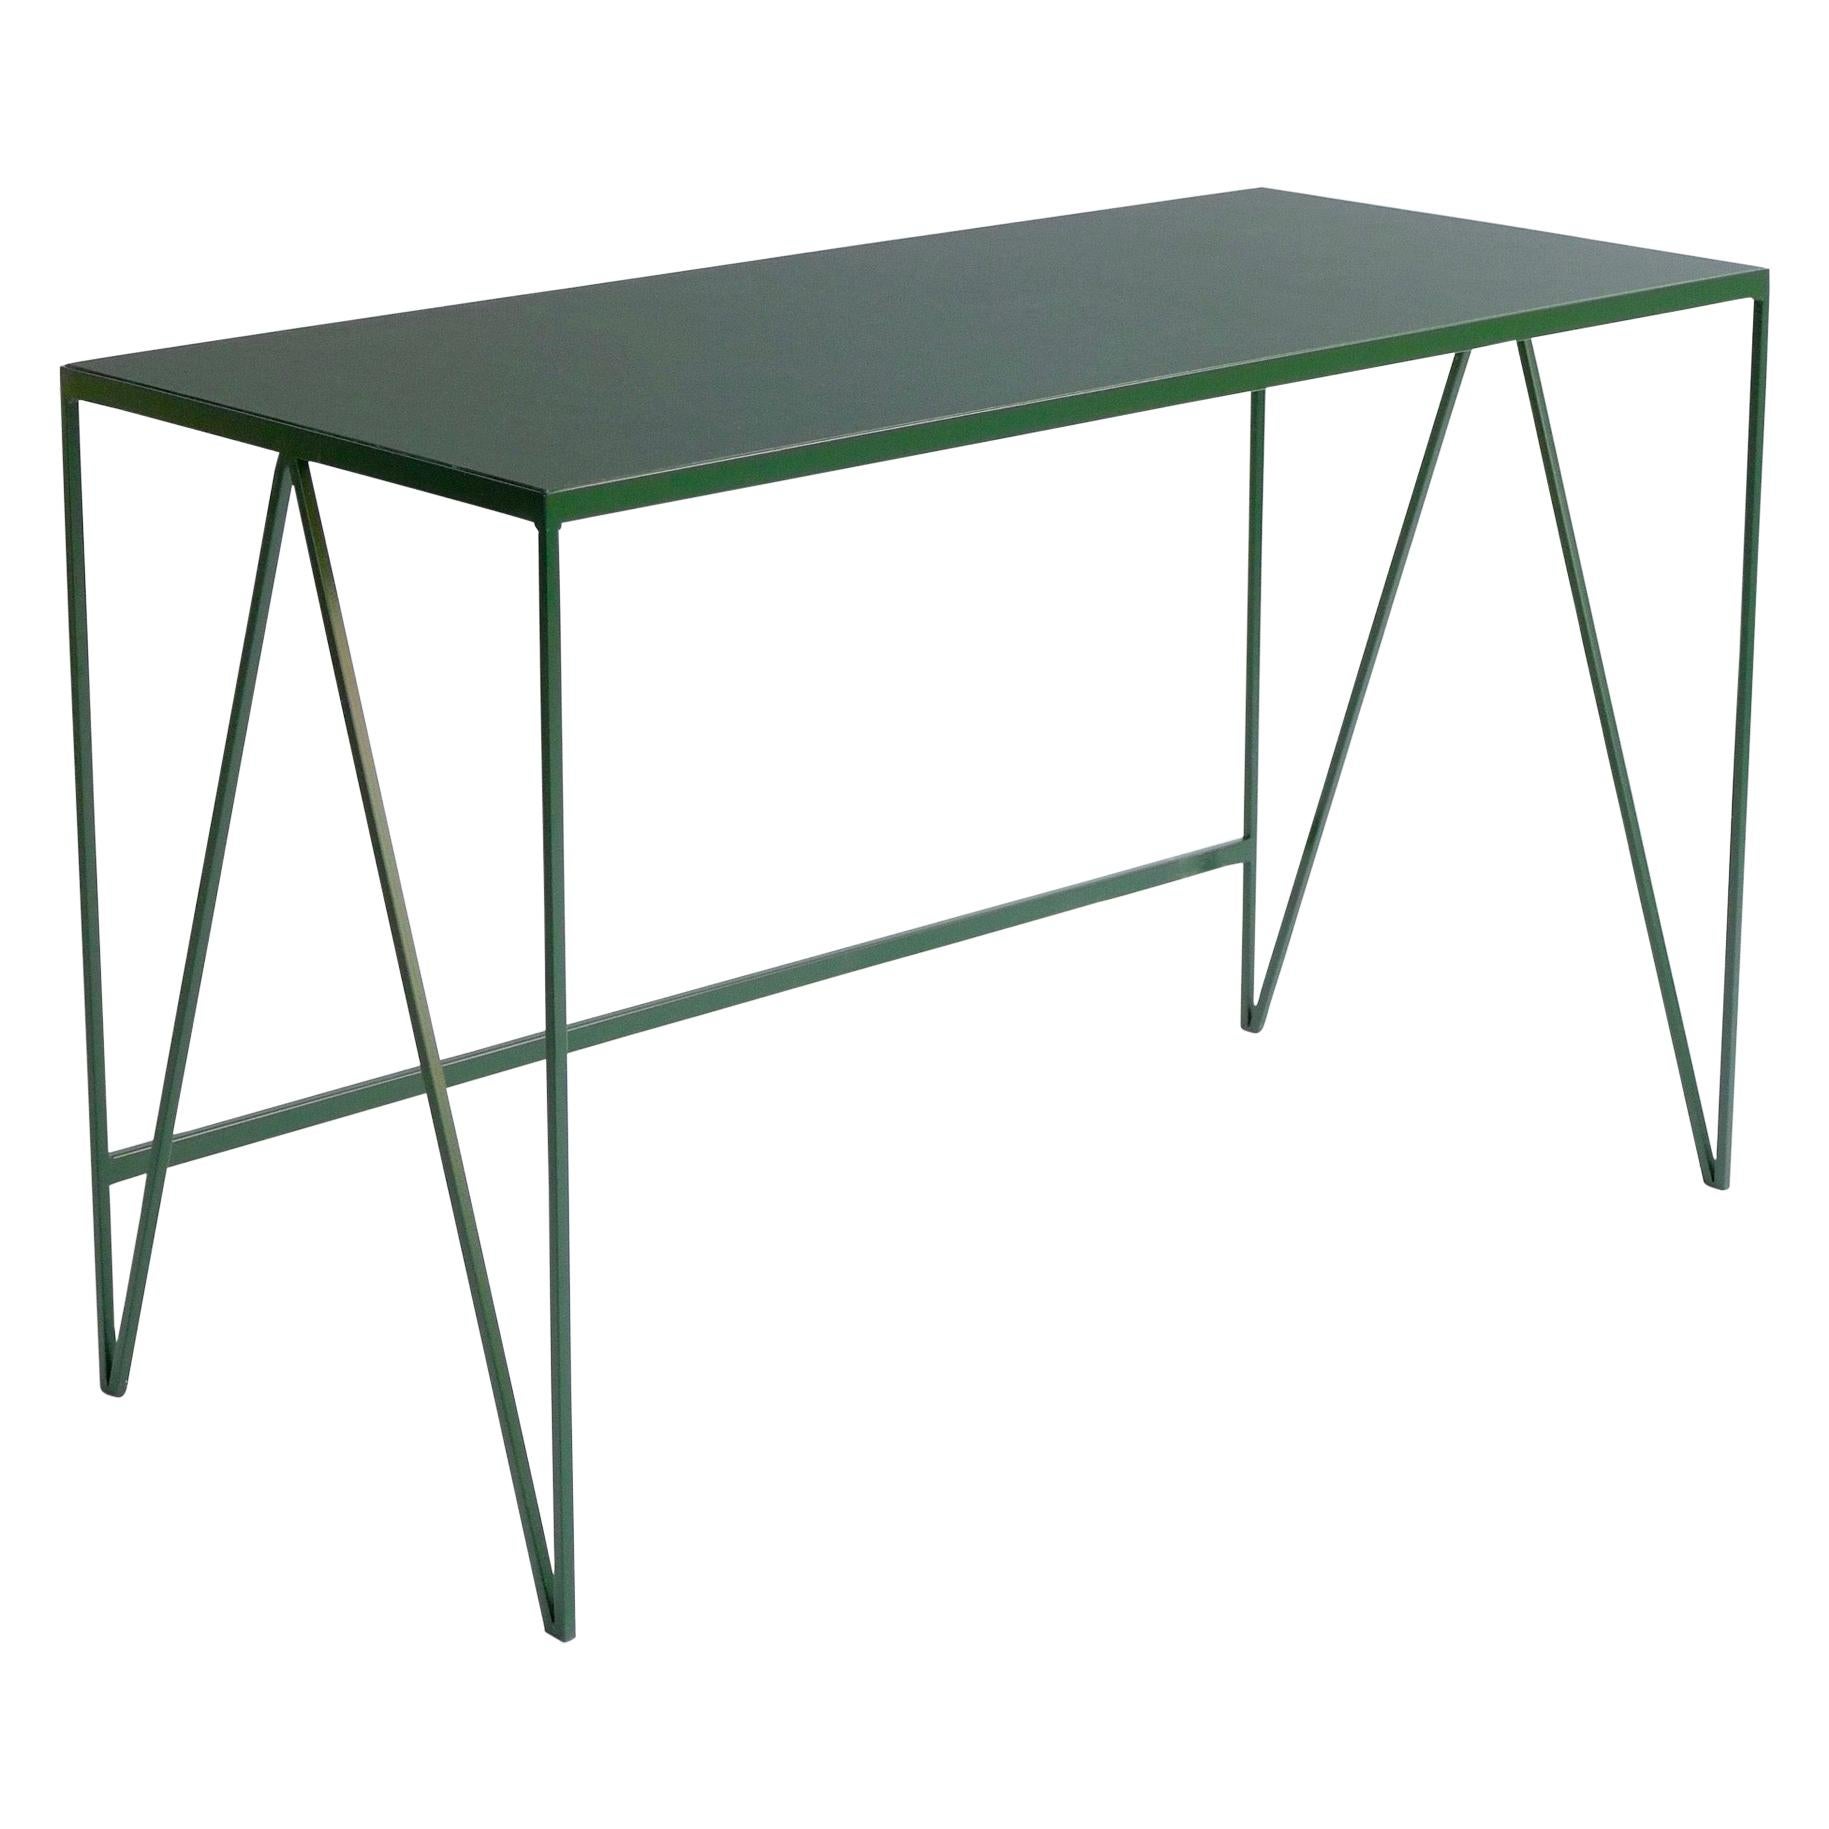 Deep Green Study Desk with Natural Linoleum Table Top, Customizable